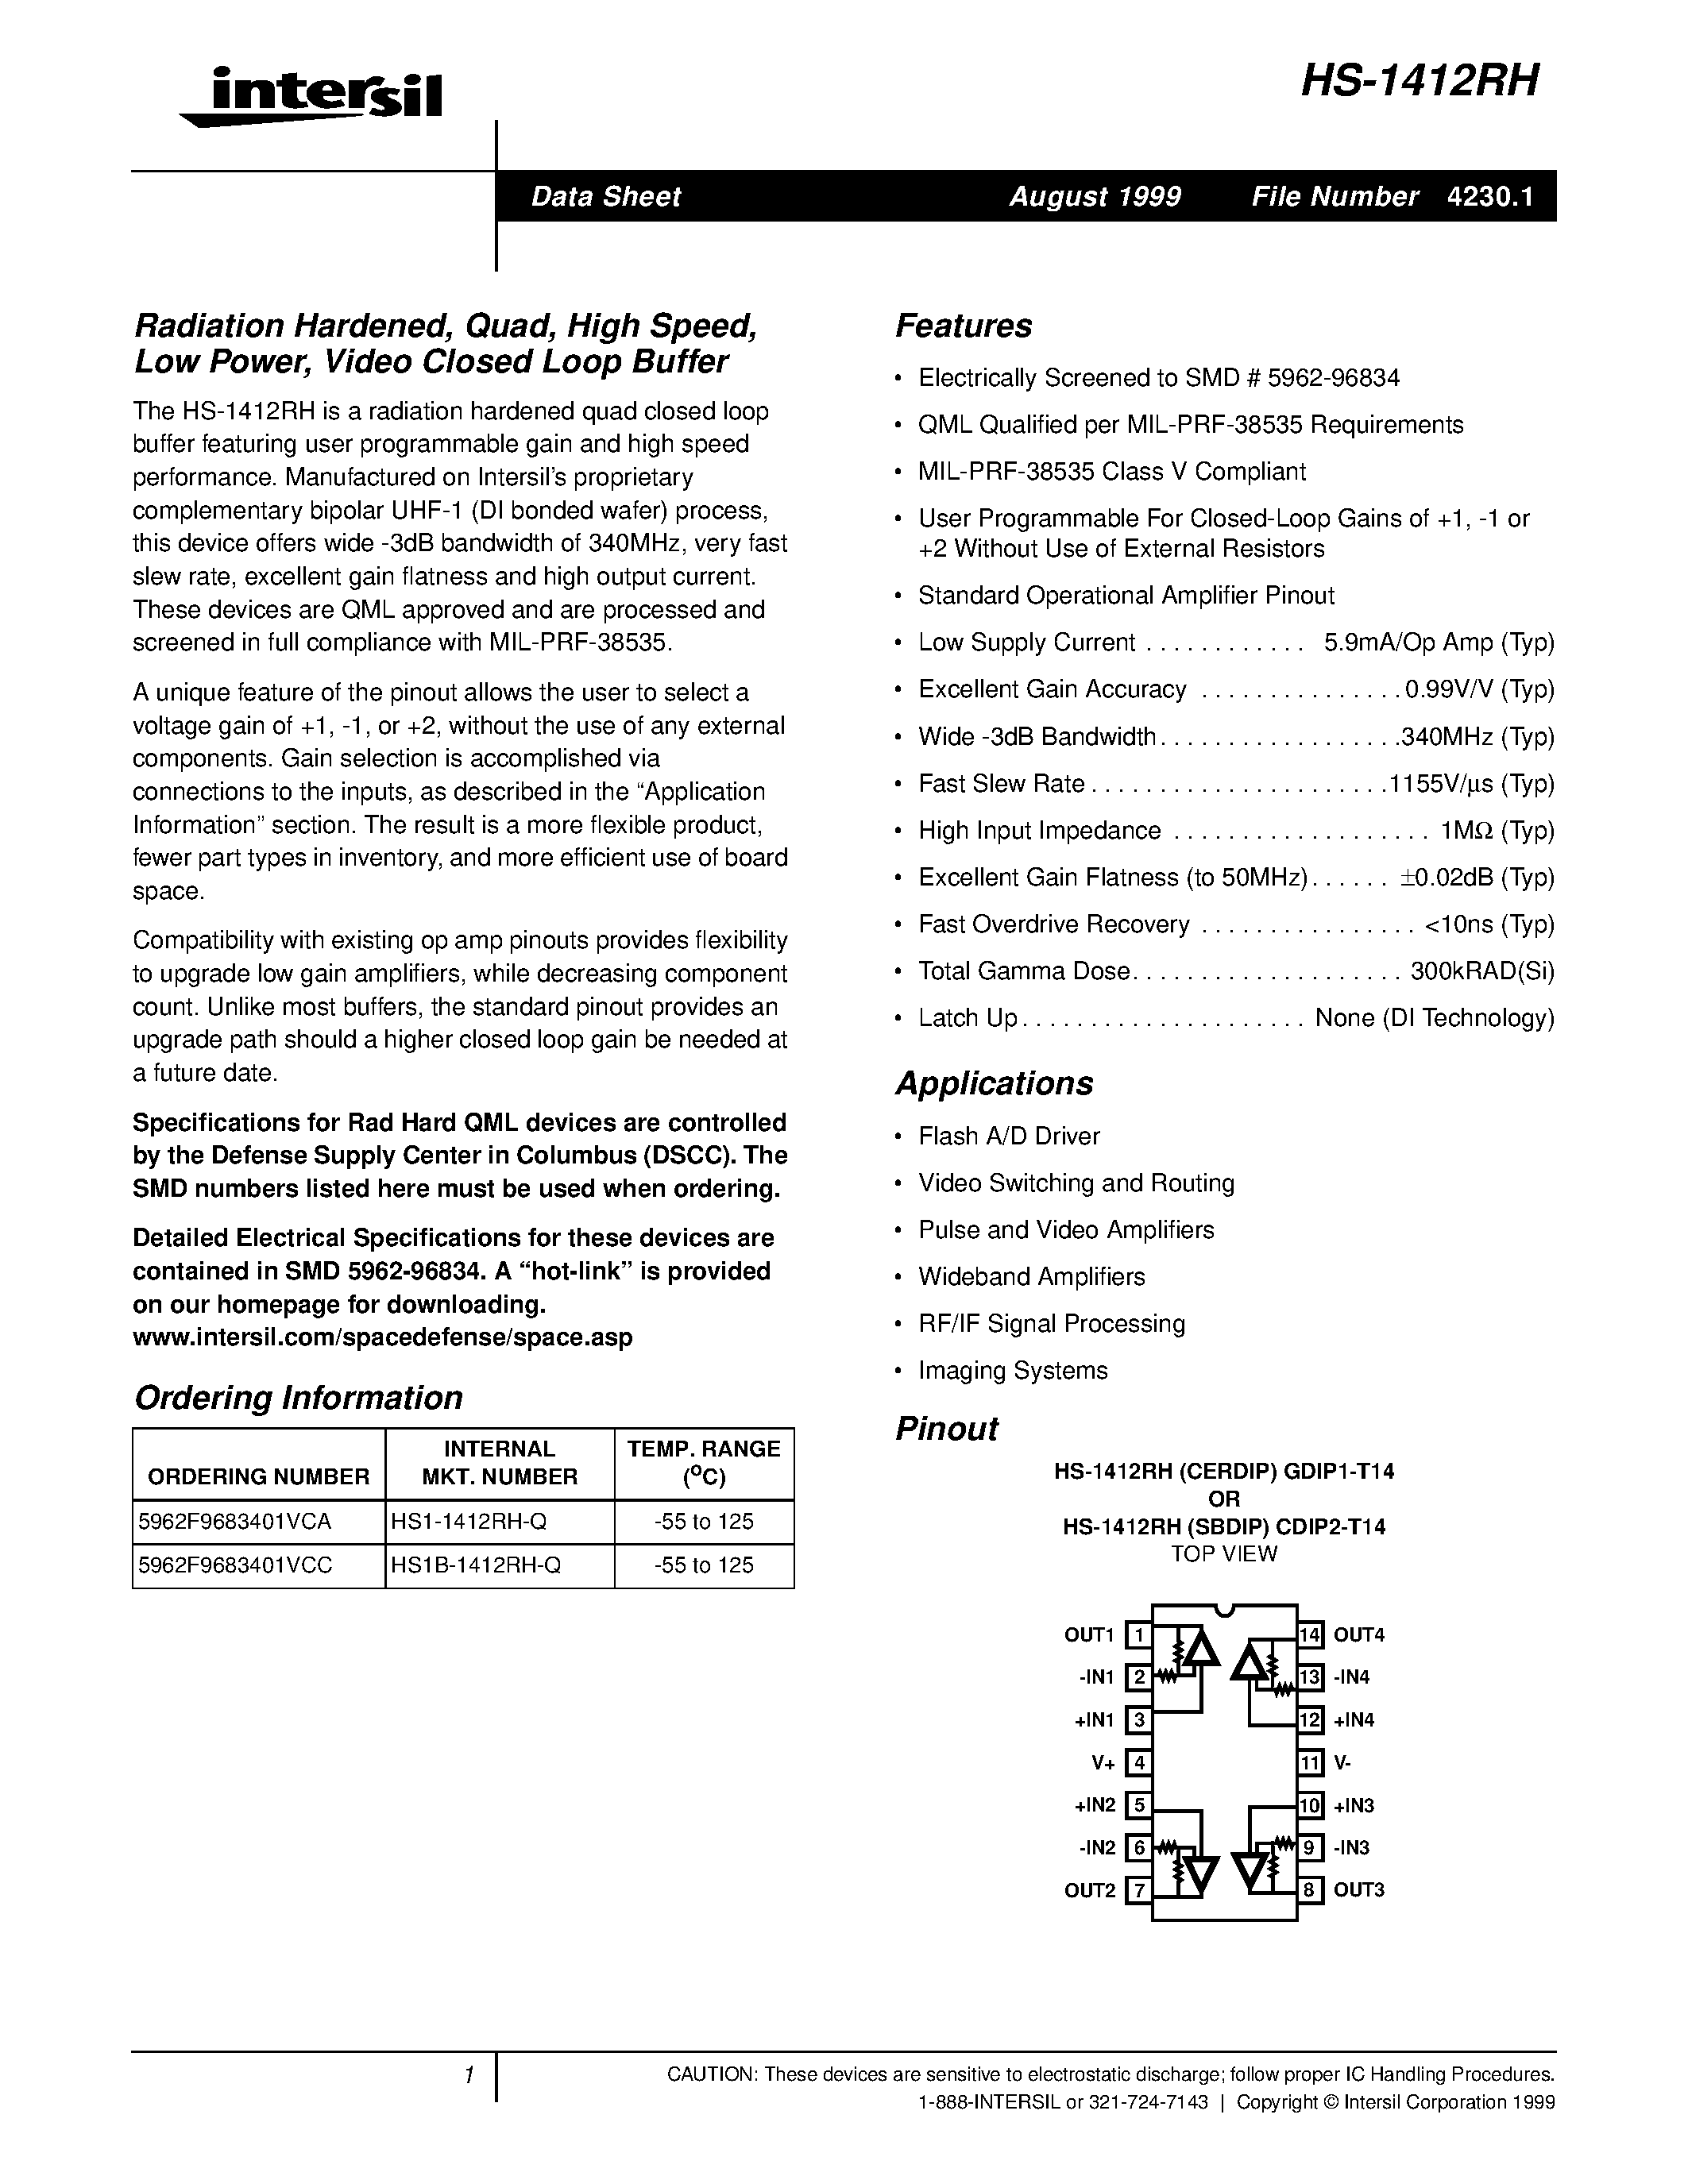 Даташит HS1-1412RH-Q - Radiation Hardened/ Quad/ High Speed/ Low Power/ Video Closed Loop Buffer страница 1